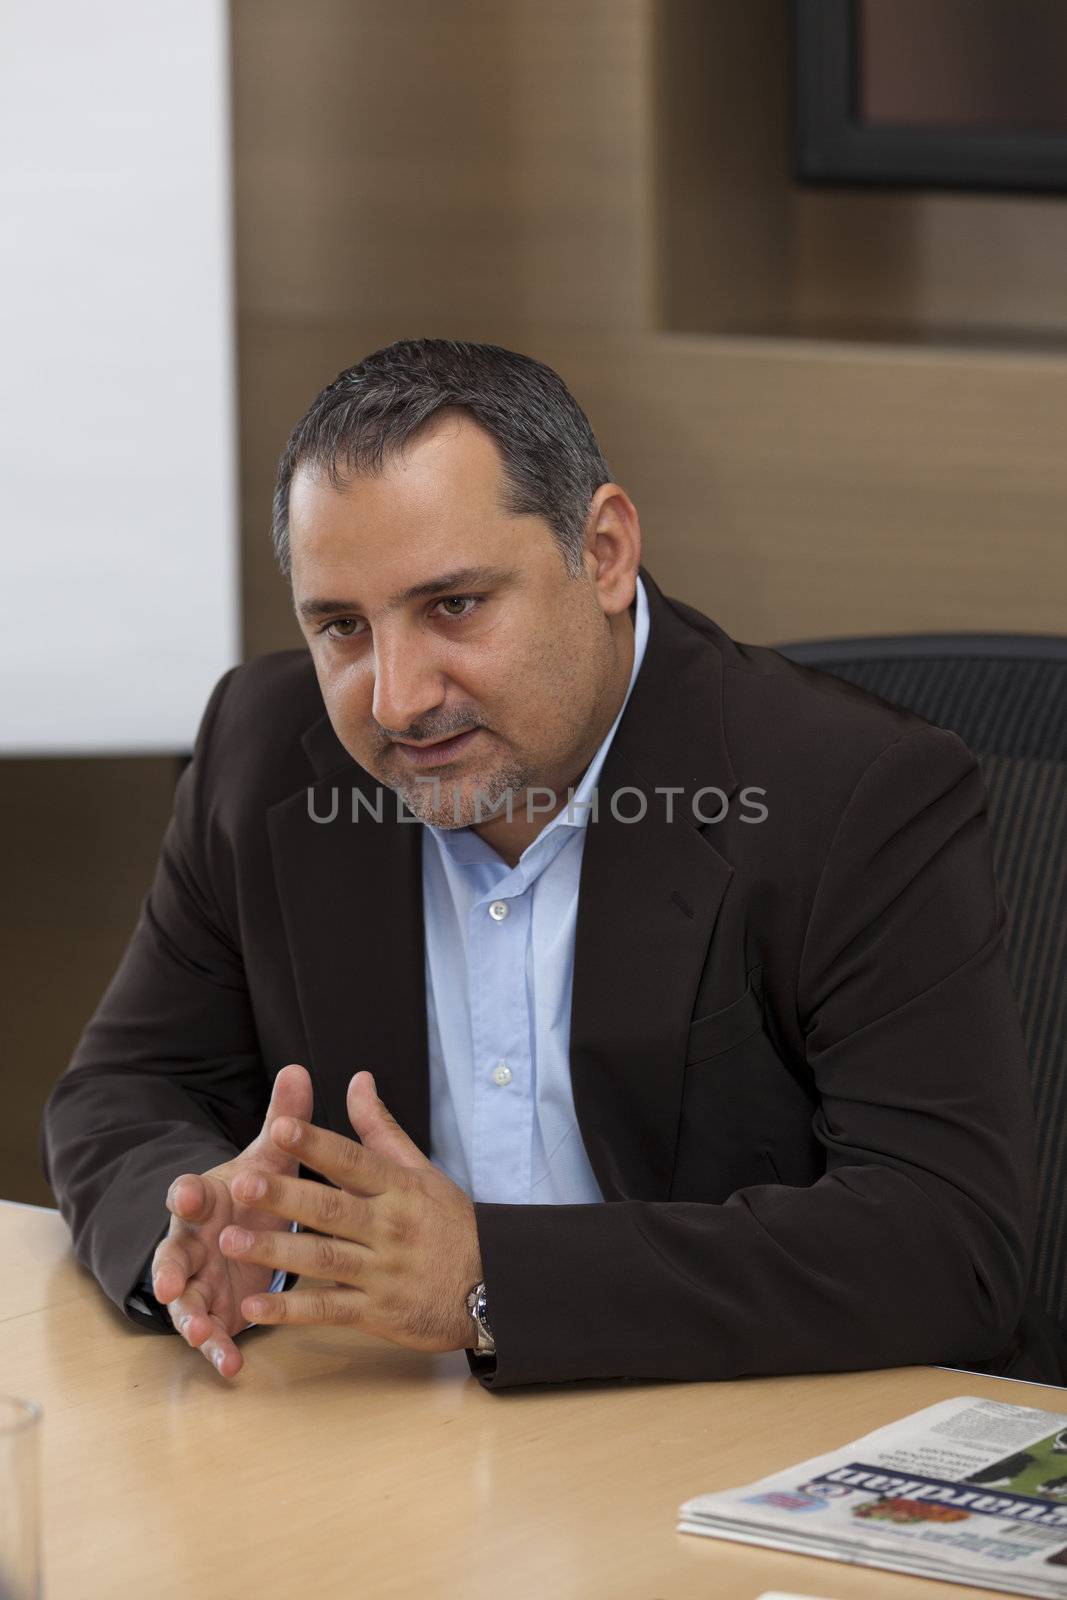 SMART CITY, MALTA - 6 JUN - Smart City Malta CEO Fareed Abdulrahman during an interview at Smart City Malta